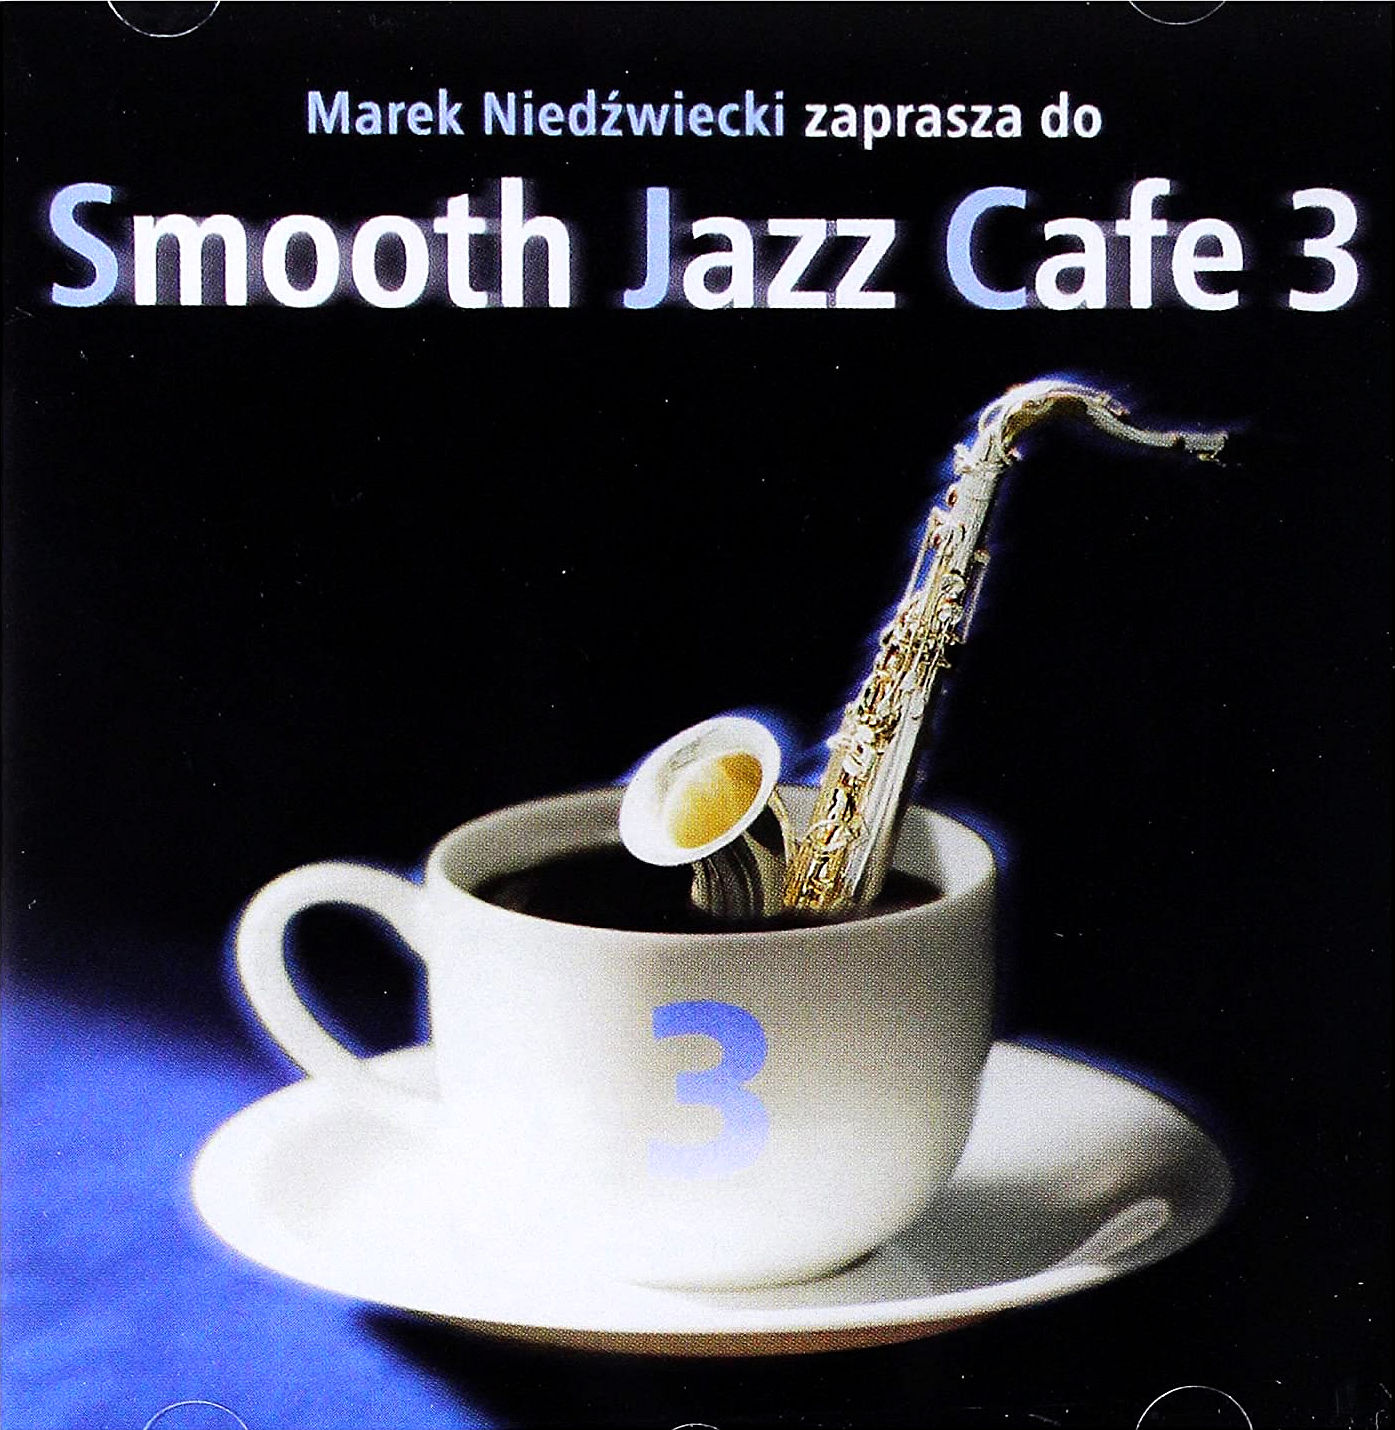 Smooth Jazz Cafe 3